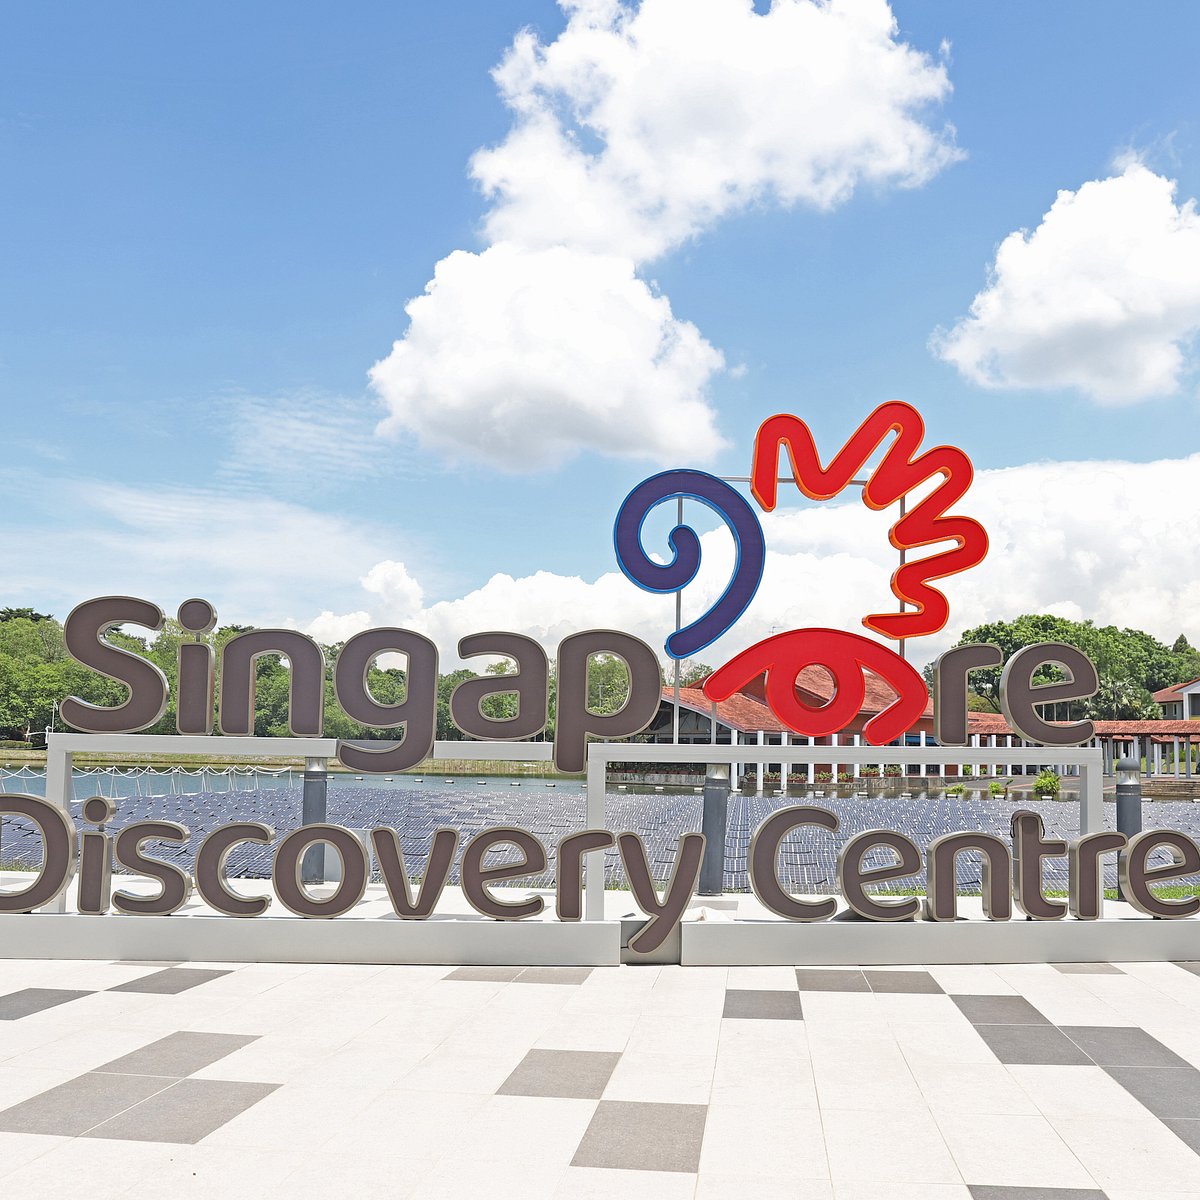 Дискавери центр. Singapore Discovery Centre. Singapore Discovery Centre Jurong West.